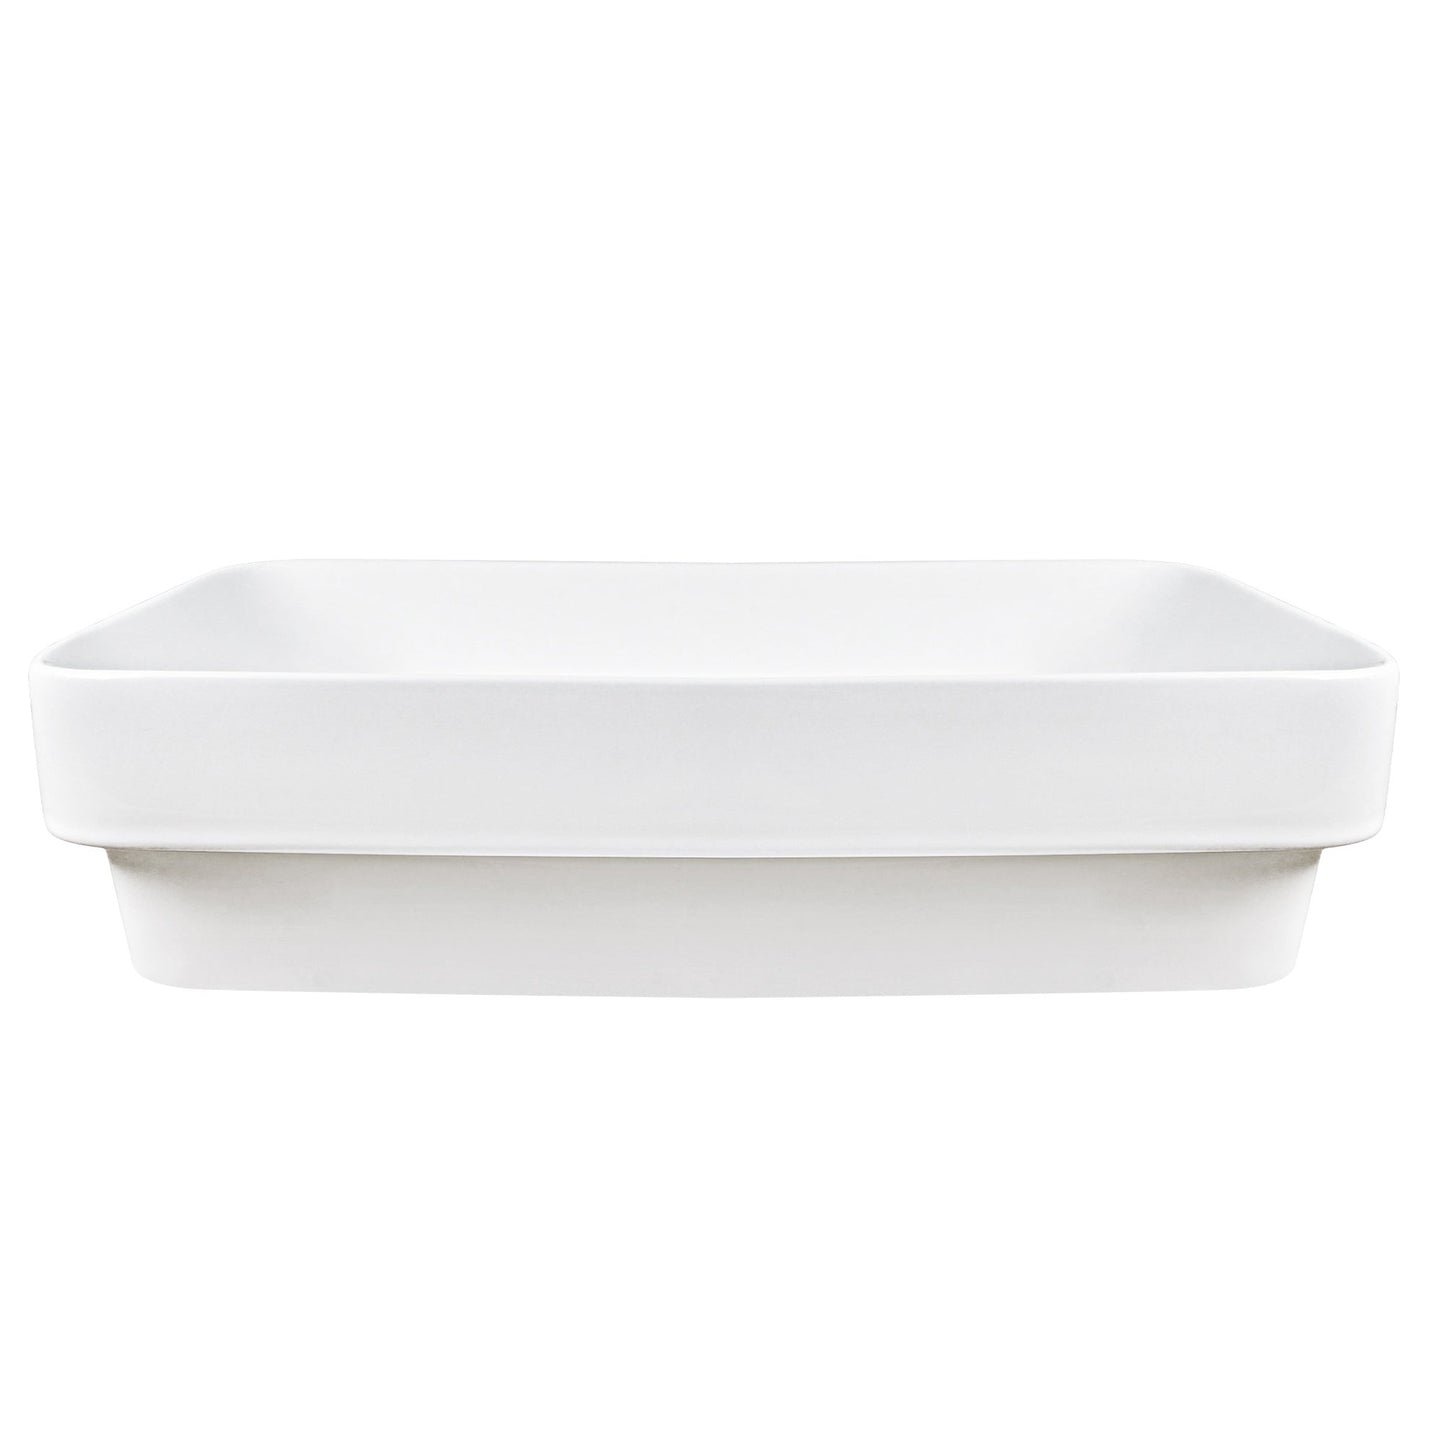 DeerValley Ally 12" Rectangular White Scratch-Resistant Ceramic Drop-in Bathroom Sink